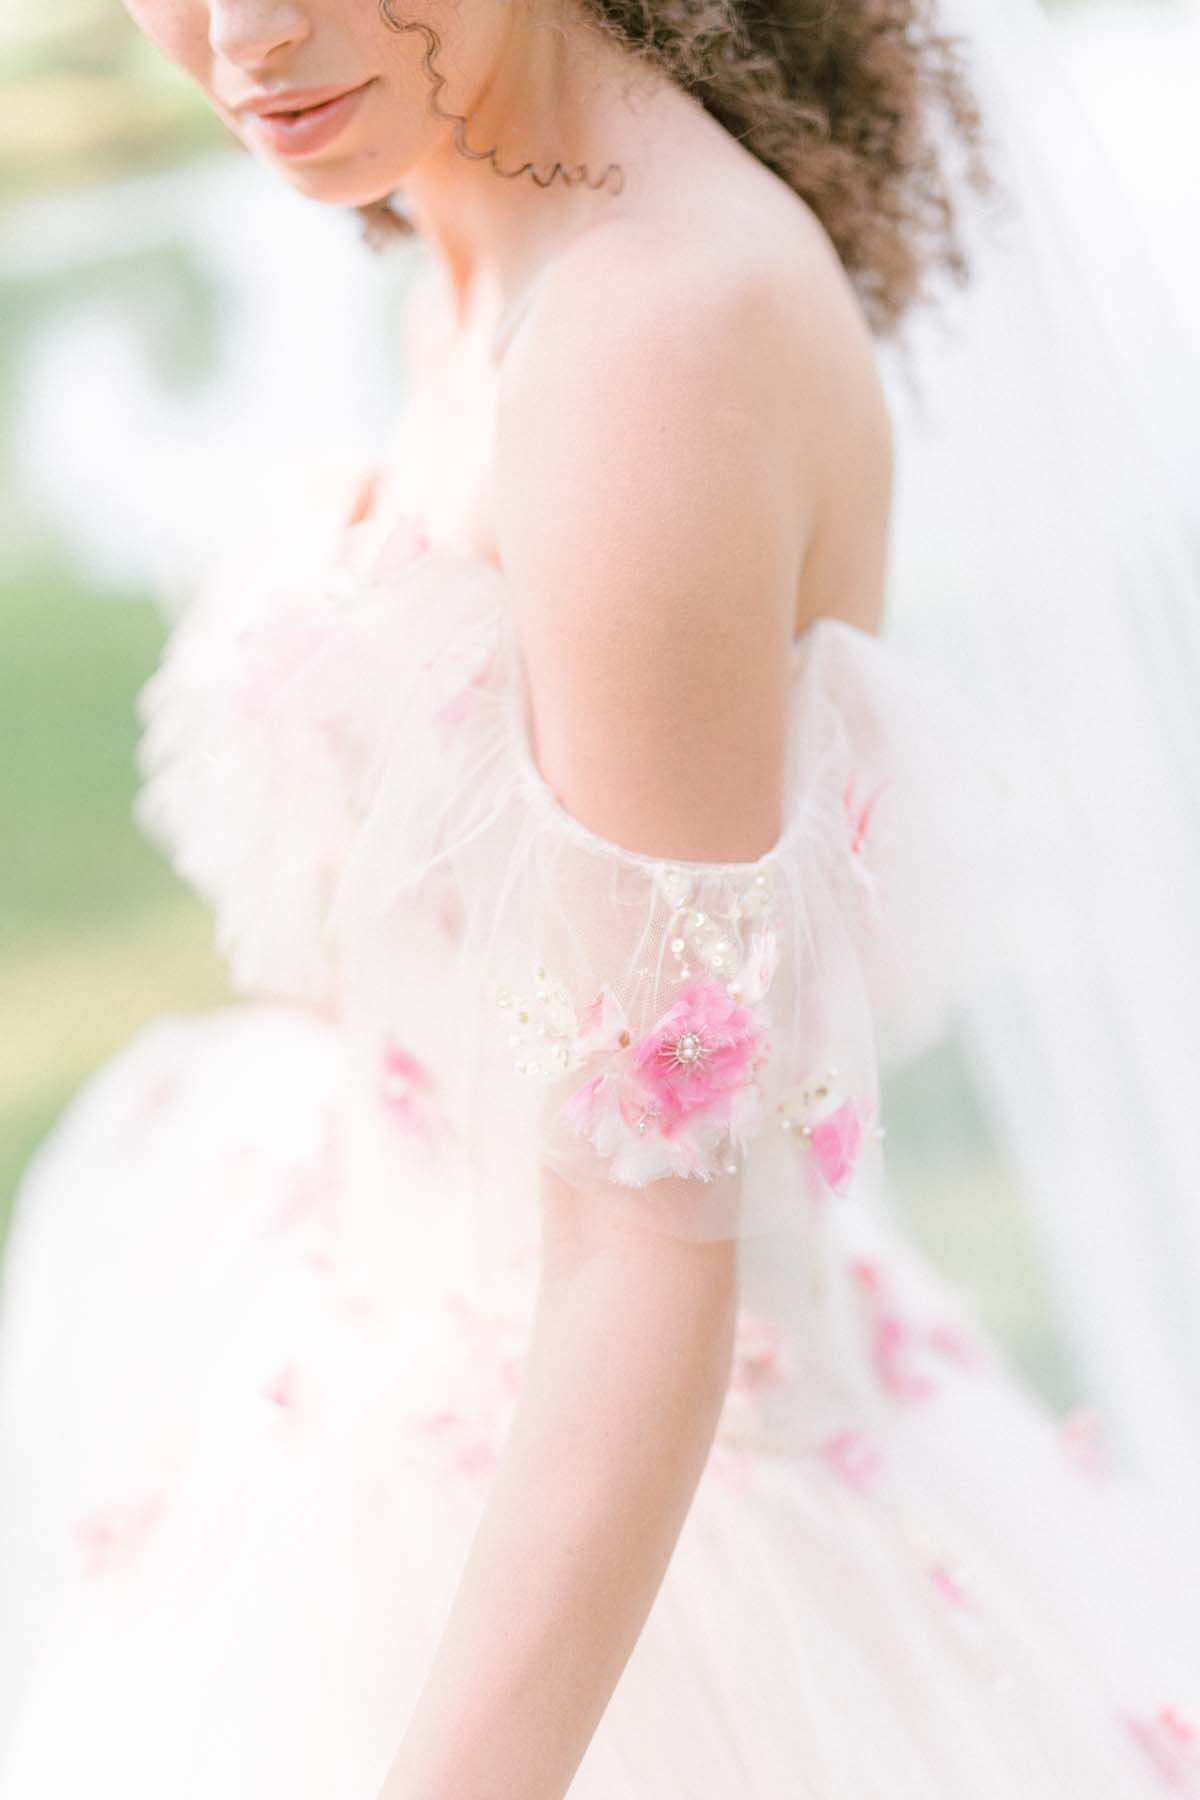 Monique Lhuillier bridal gown by luxury wedding photographer Amanda Watson